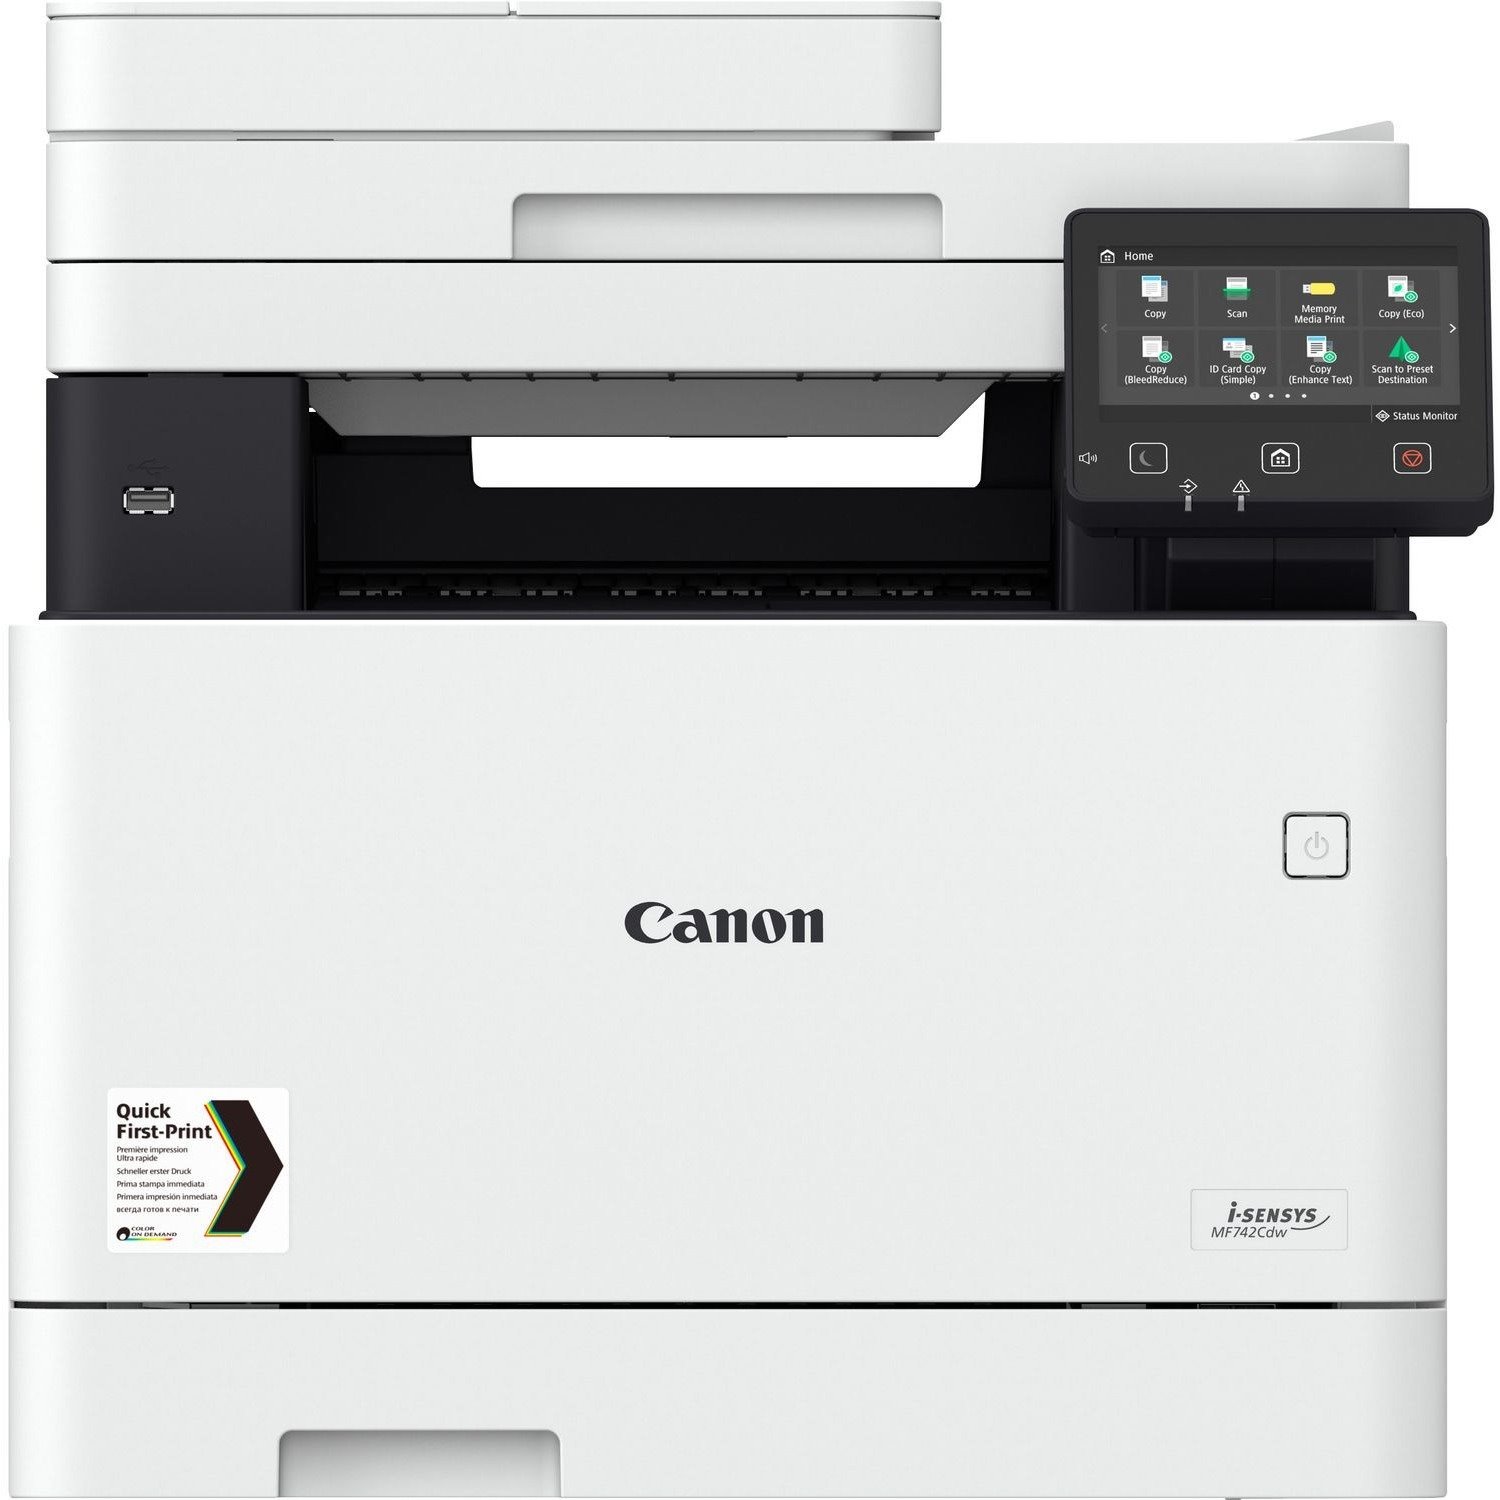 Canon imageCLASS MF740 MF741Cdw Laser Multifunction Printer-Color-Copier/Scanner-ppm Mono/28 ppm Color Print-600x600 dpi Print-Automatic Duplex Print-300 sheets Input-600 dpi Optical Scan-Wireless LAN-Near Field Communication (NFC)-Mopria